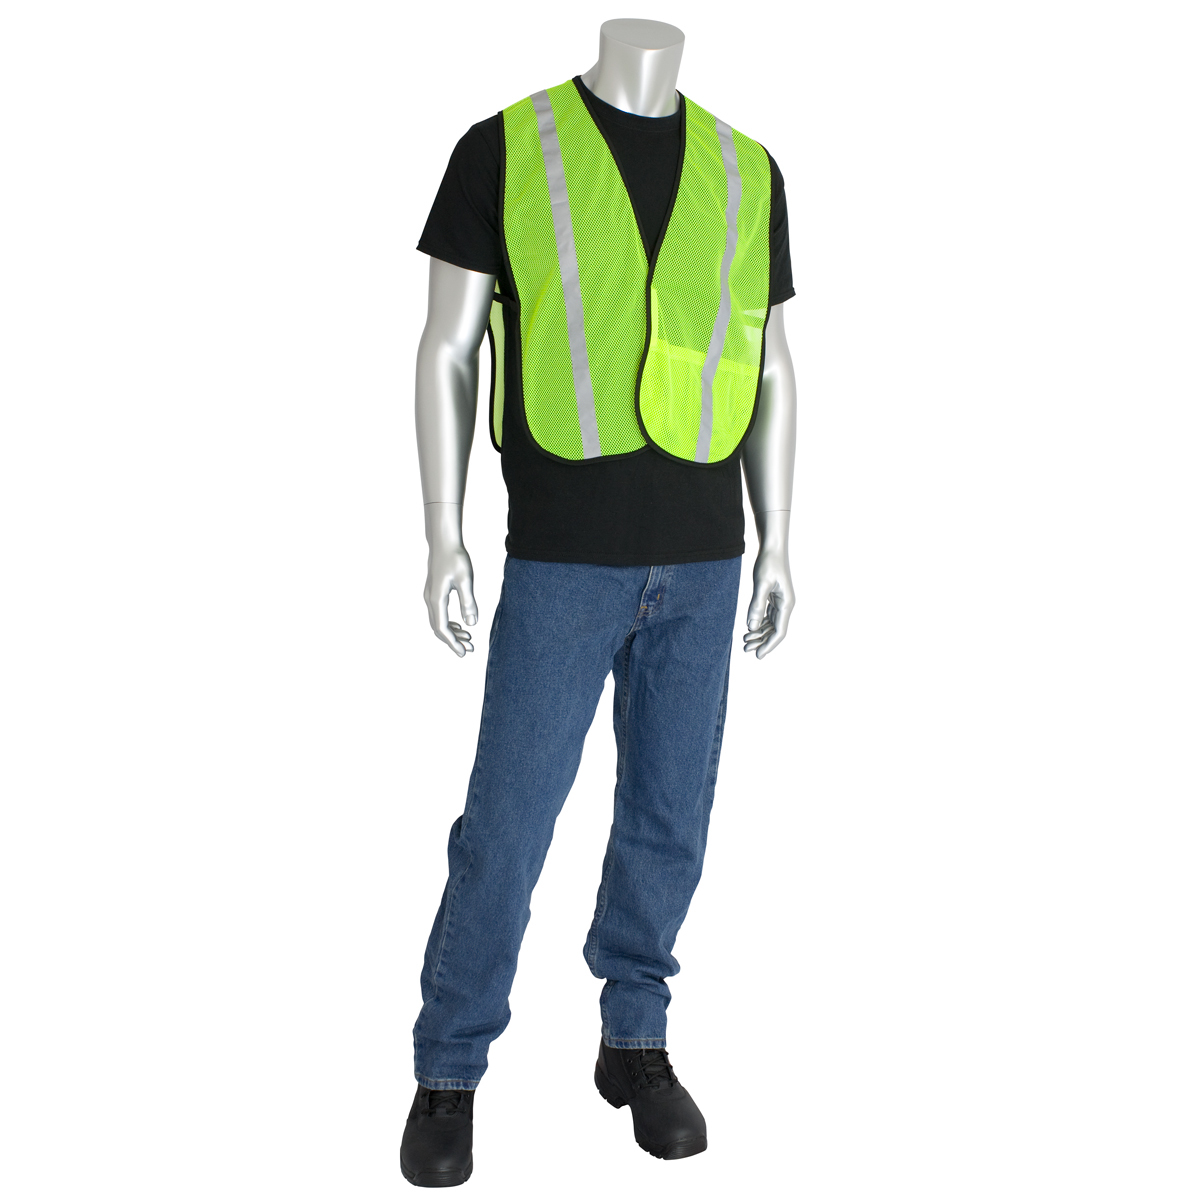 PIP® One Size Fits Most Hi-Vis Orange And Hi-Vis Yellow Mesh Safety Vest